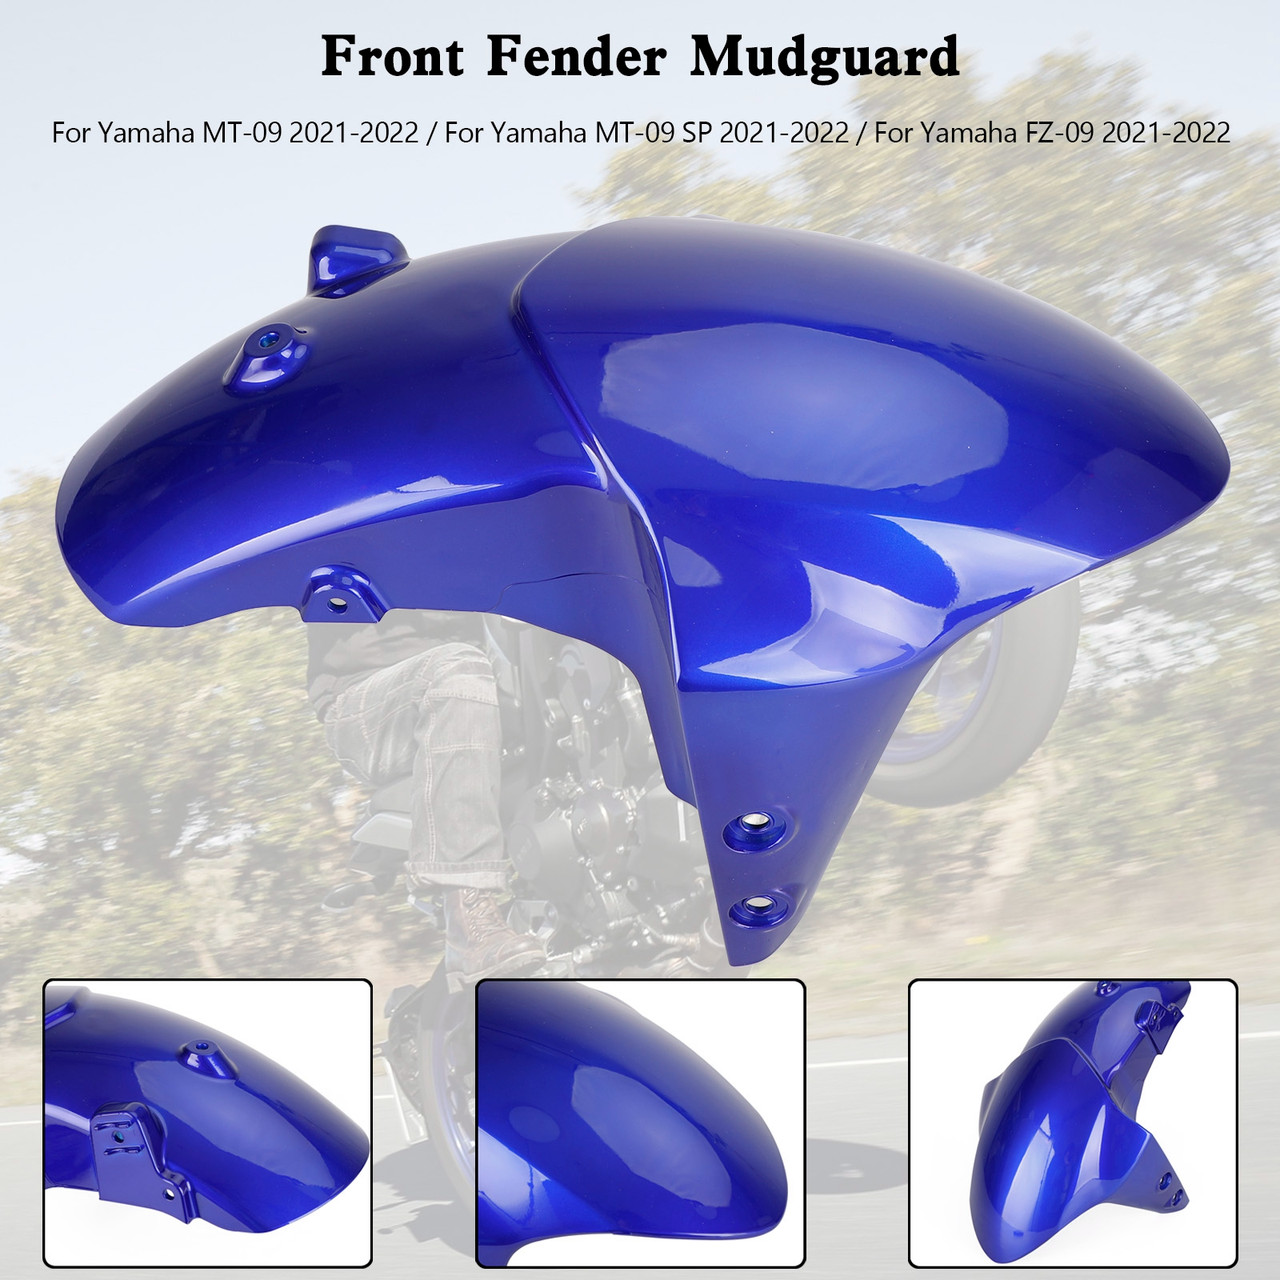 Front Fender Mudguard Fairing For Yamaha MT-09 FZ-09 MT09 SP 2021-2022 BLU